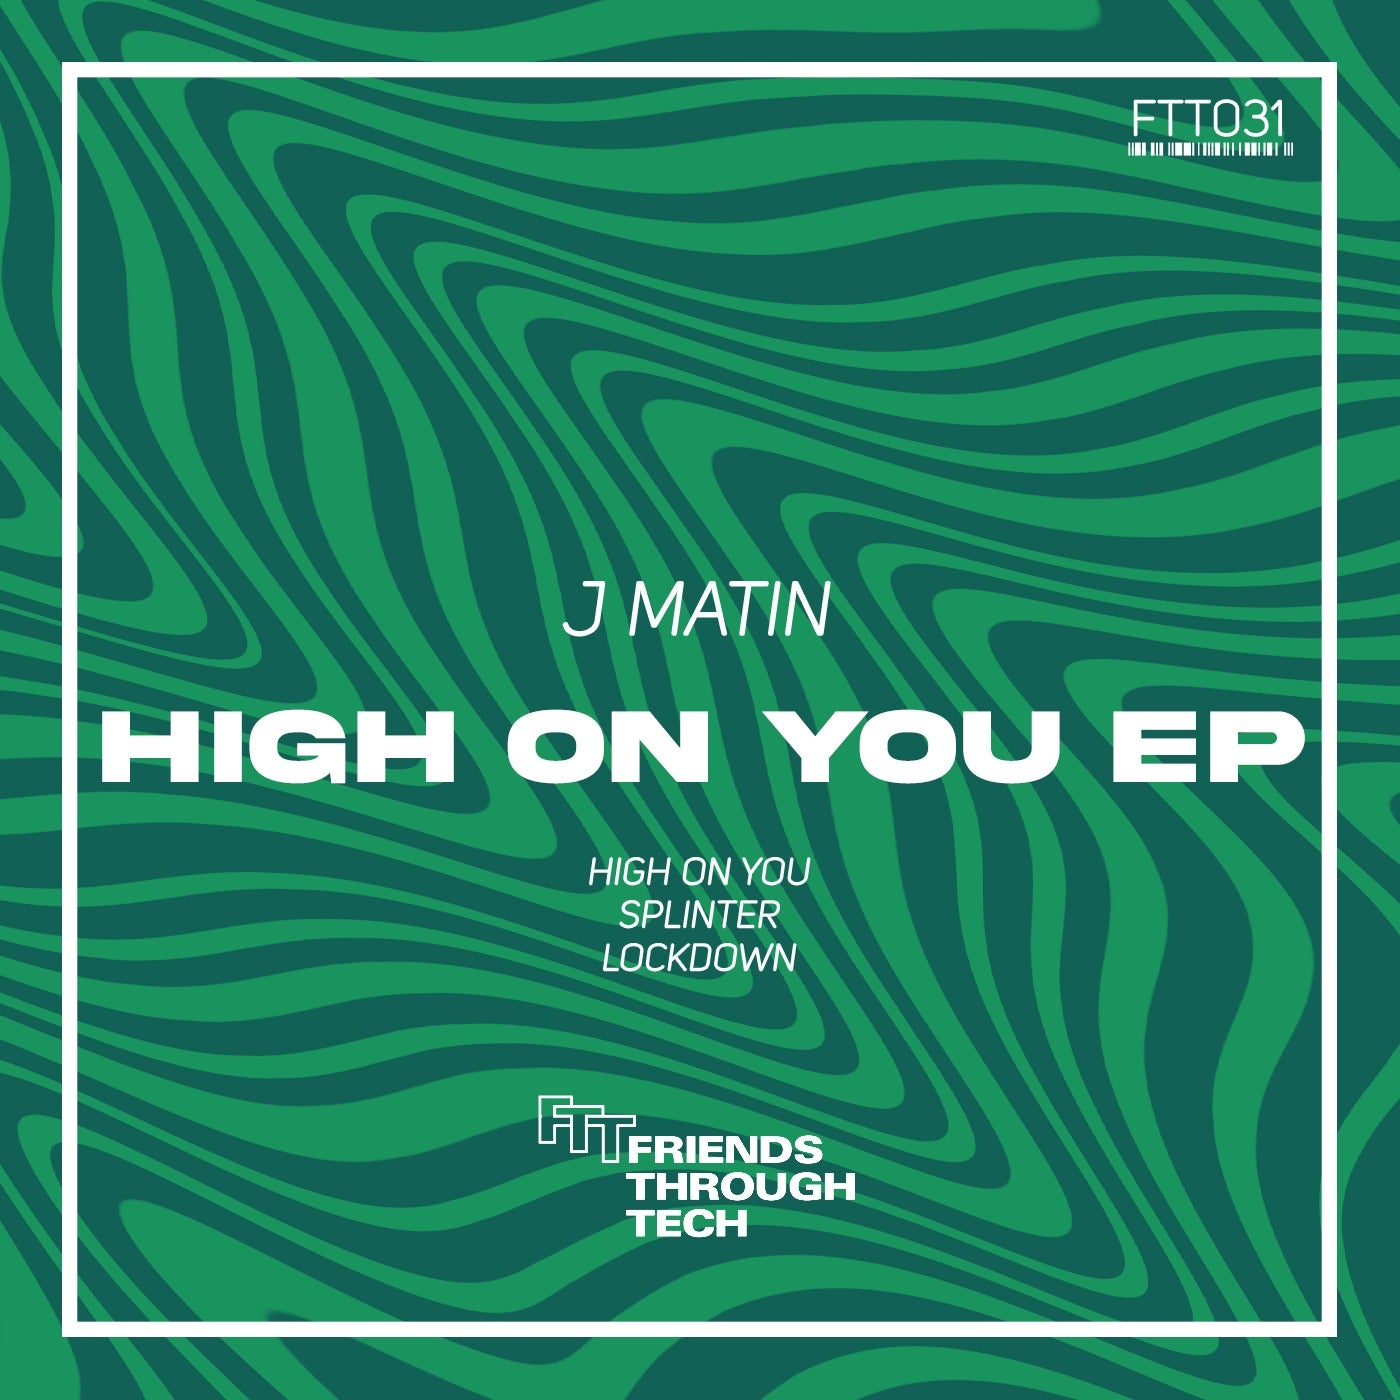 J Matin – High On You EP [FTT031]